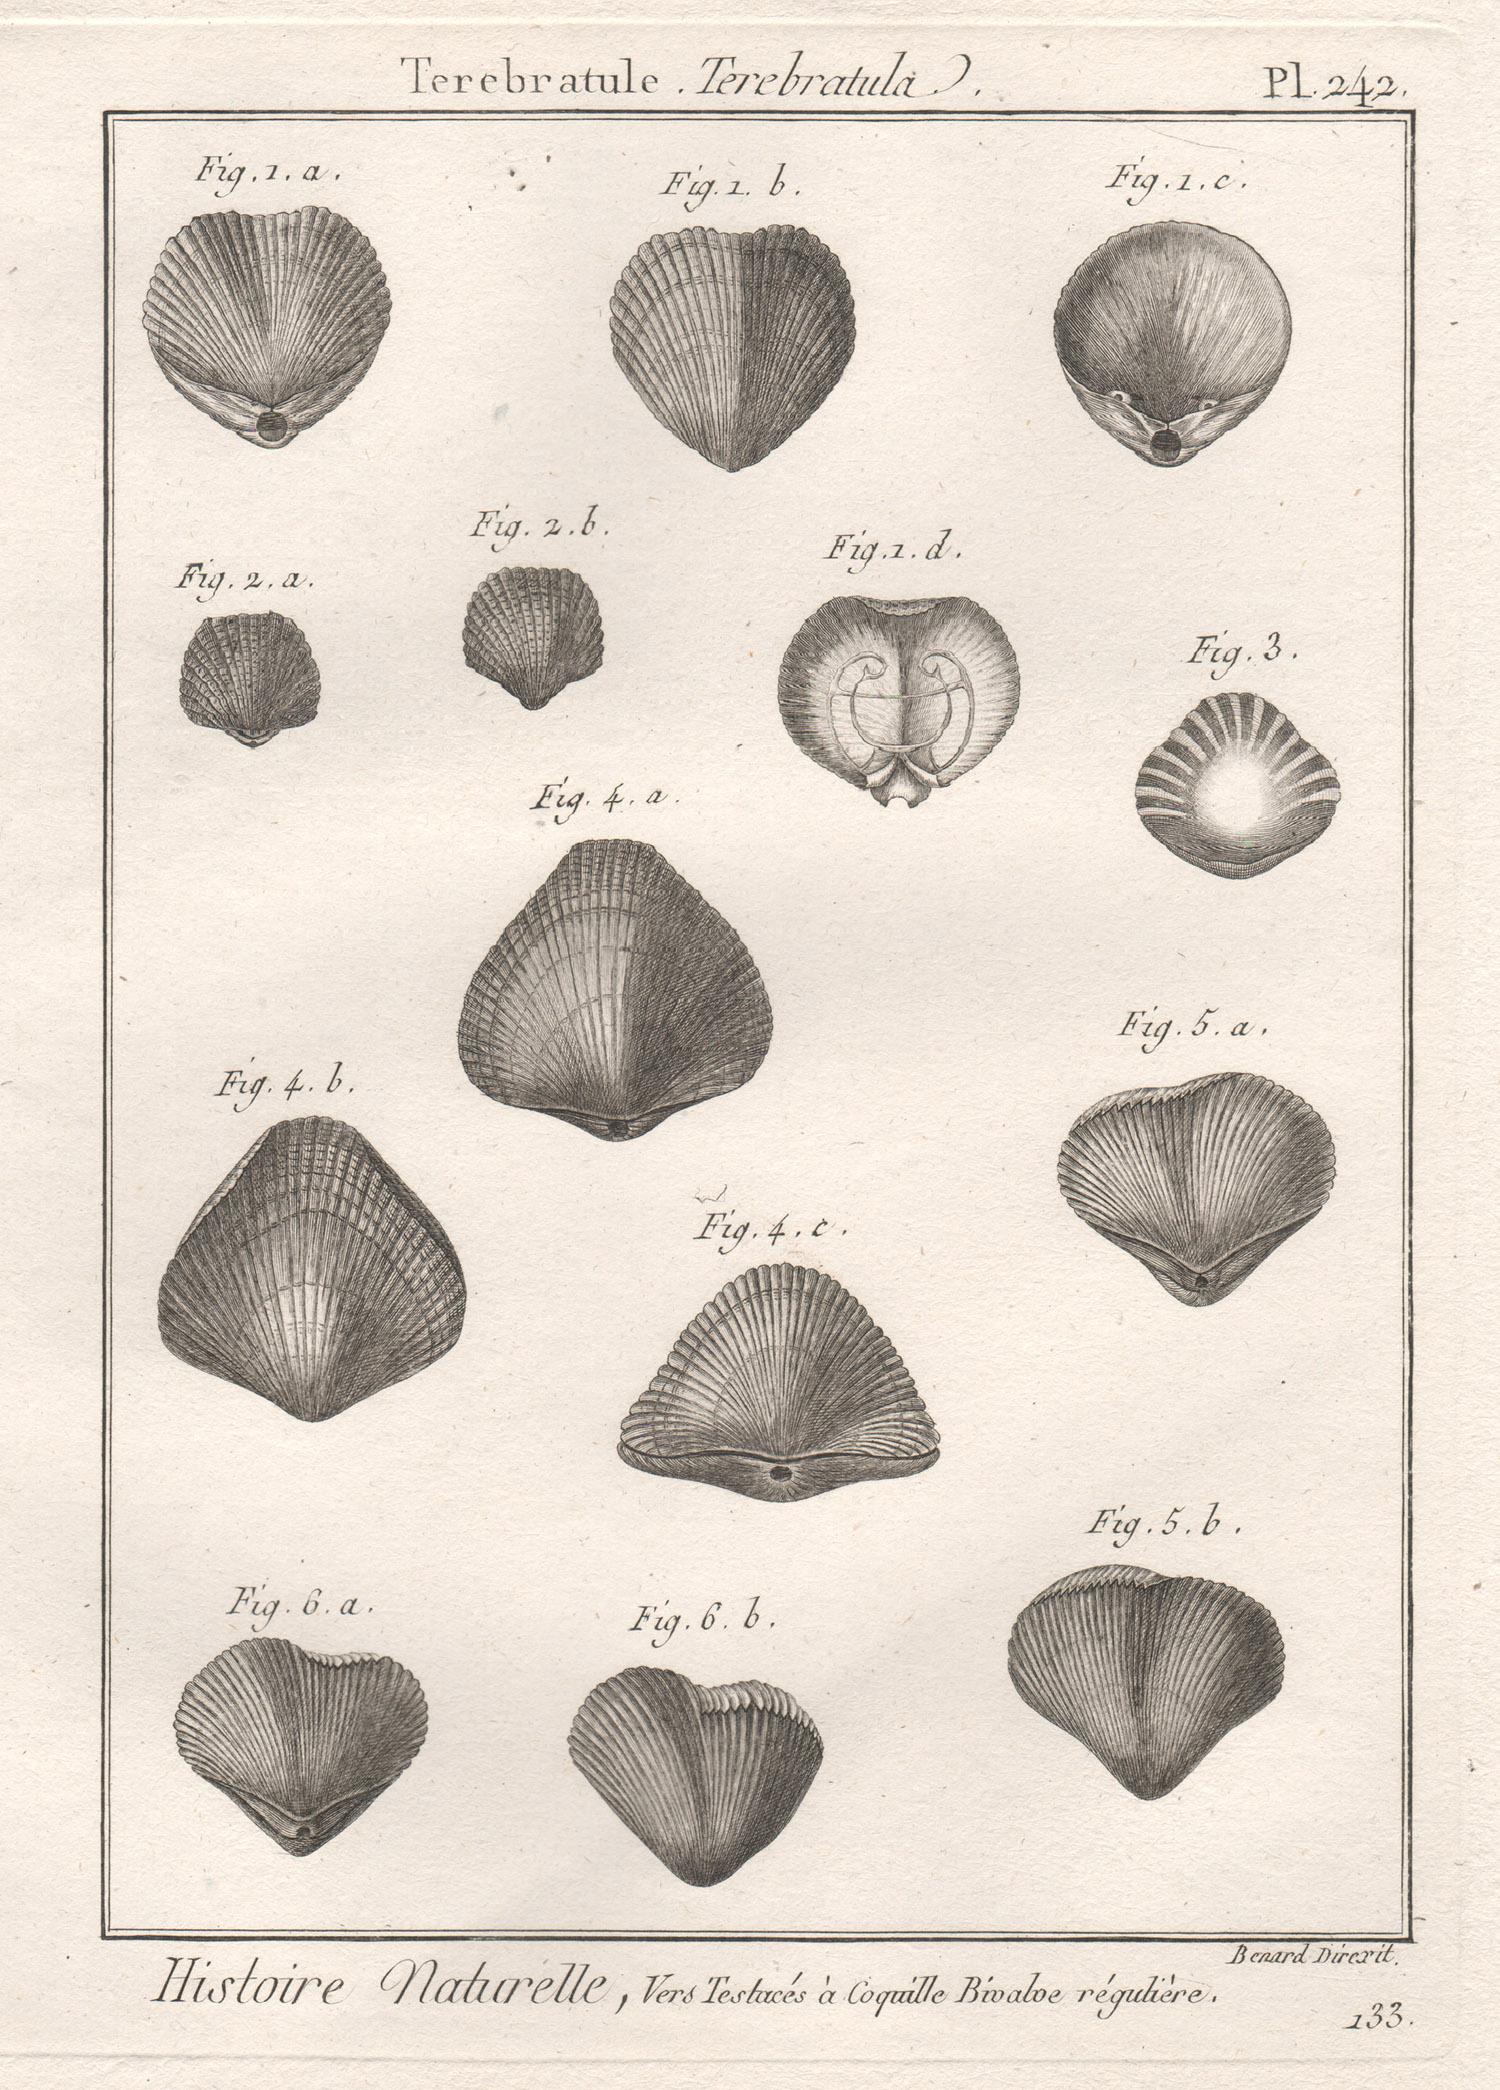 Robert Benard after Henry Joseph Redoute Print - Shells, French 18th century natural history marine sea shell engraving 